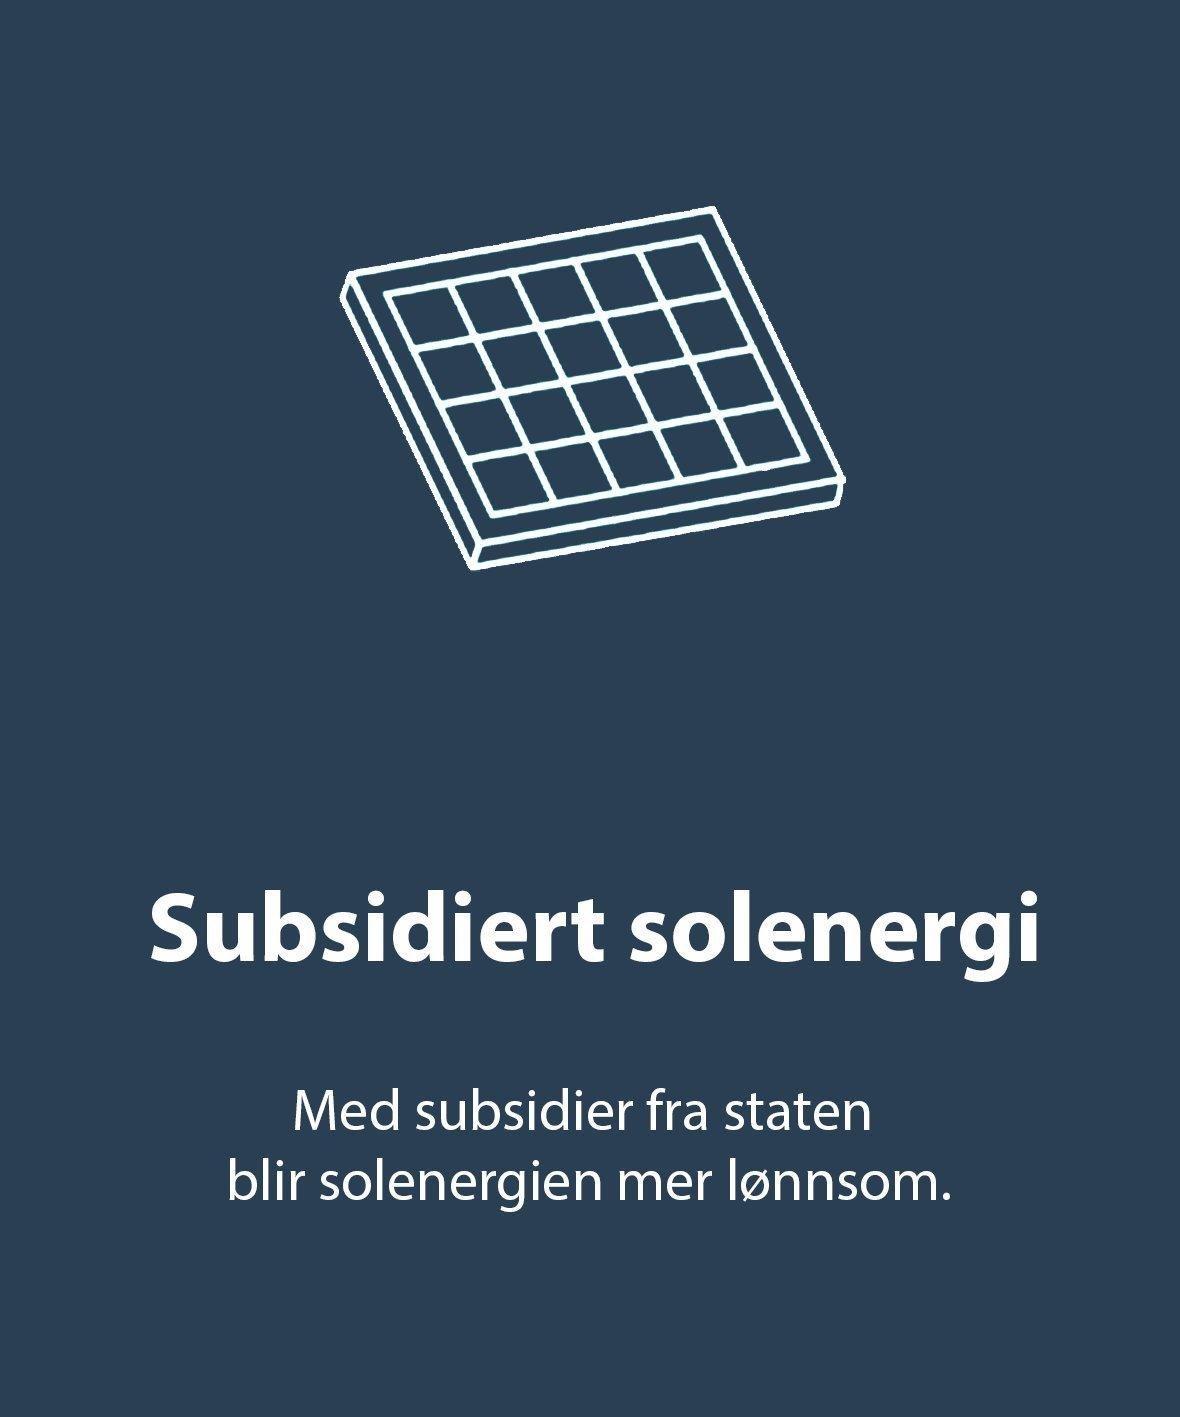 Subsidiert solenergi